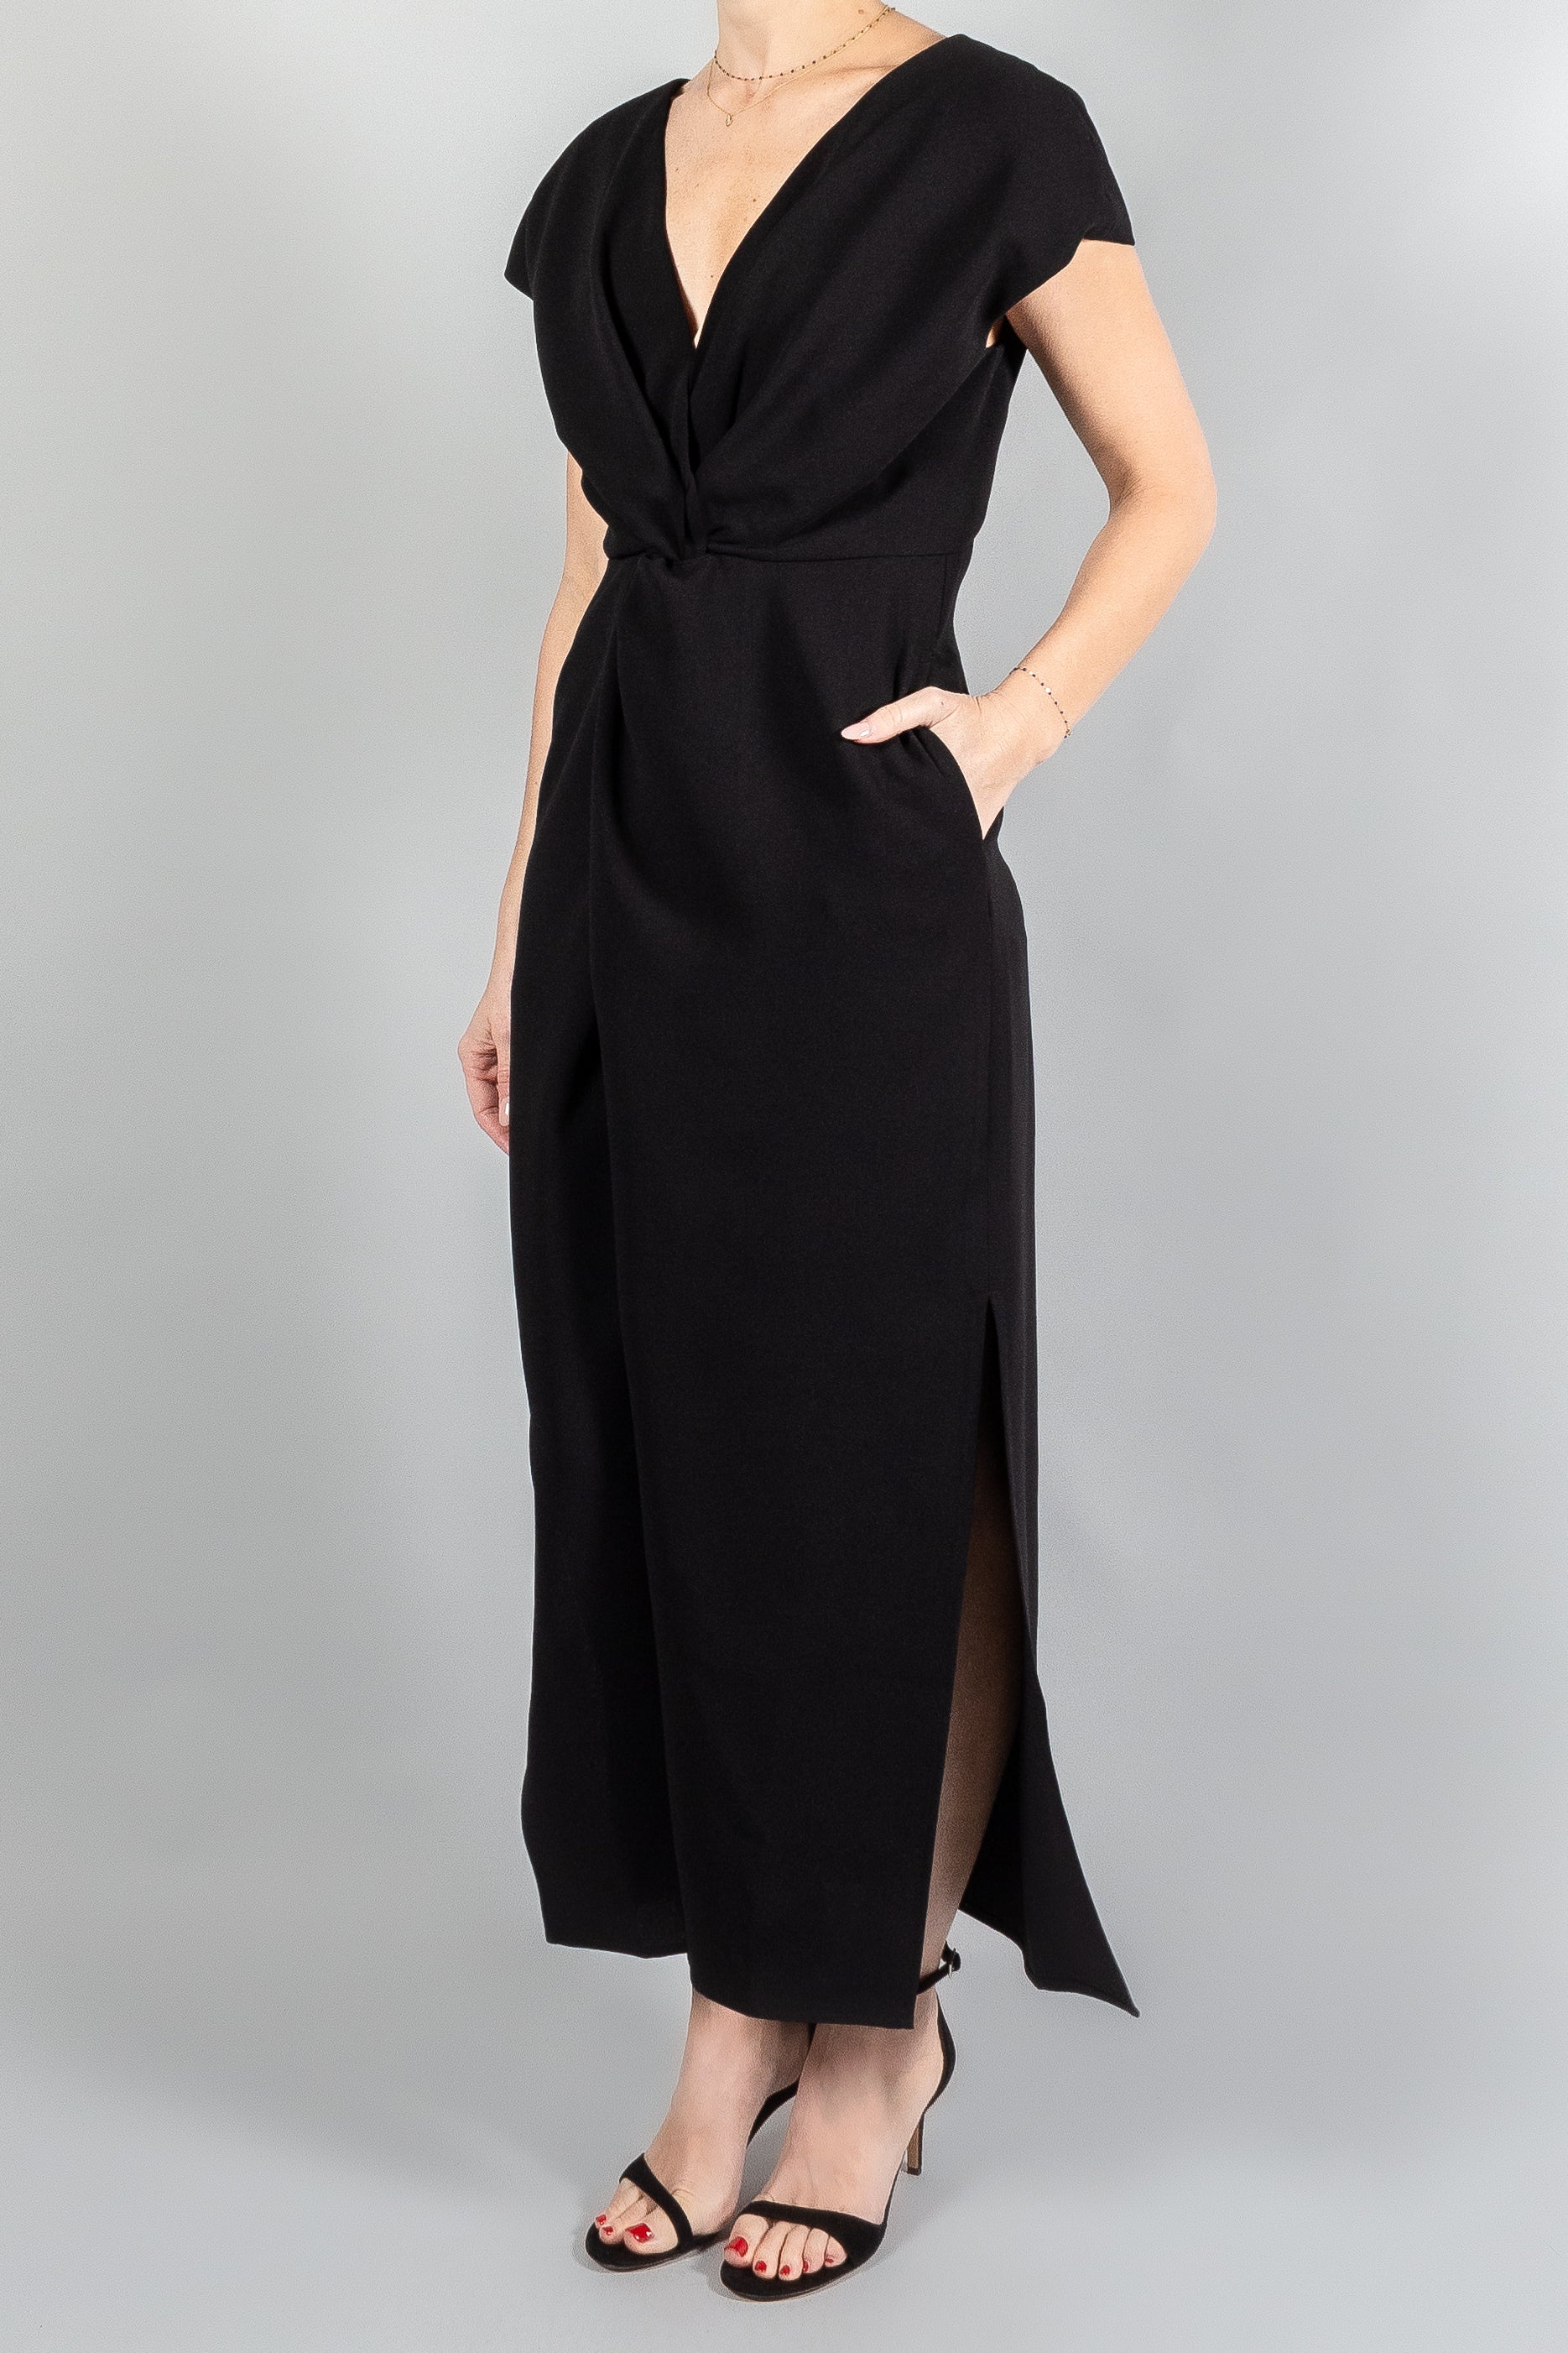 Kallmeyer Simone Evening Dress-Dresses-Misch-Boutique-Vancouver-Canada-misch.ca